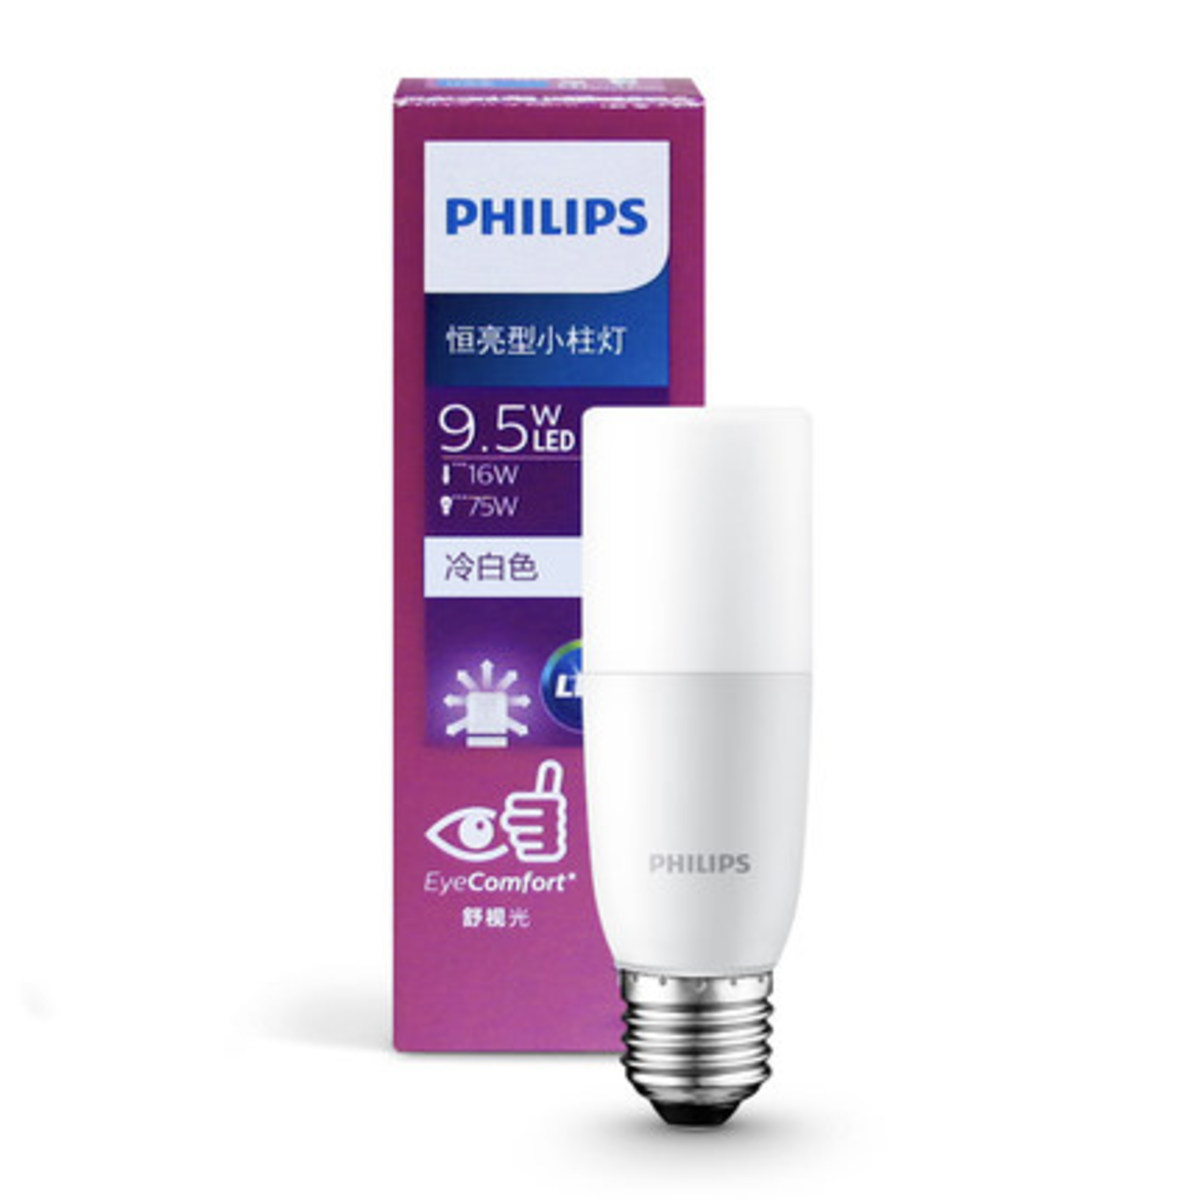 Philips Eyecomfort 飛利浦 舒視光技術 護眼LED燈泡 燈膽  E27 螺頭 9.5W 6500K 冷白光